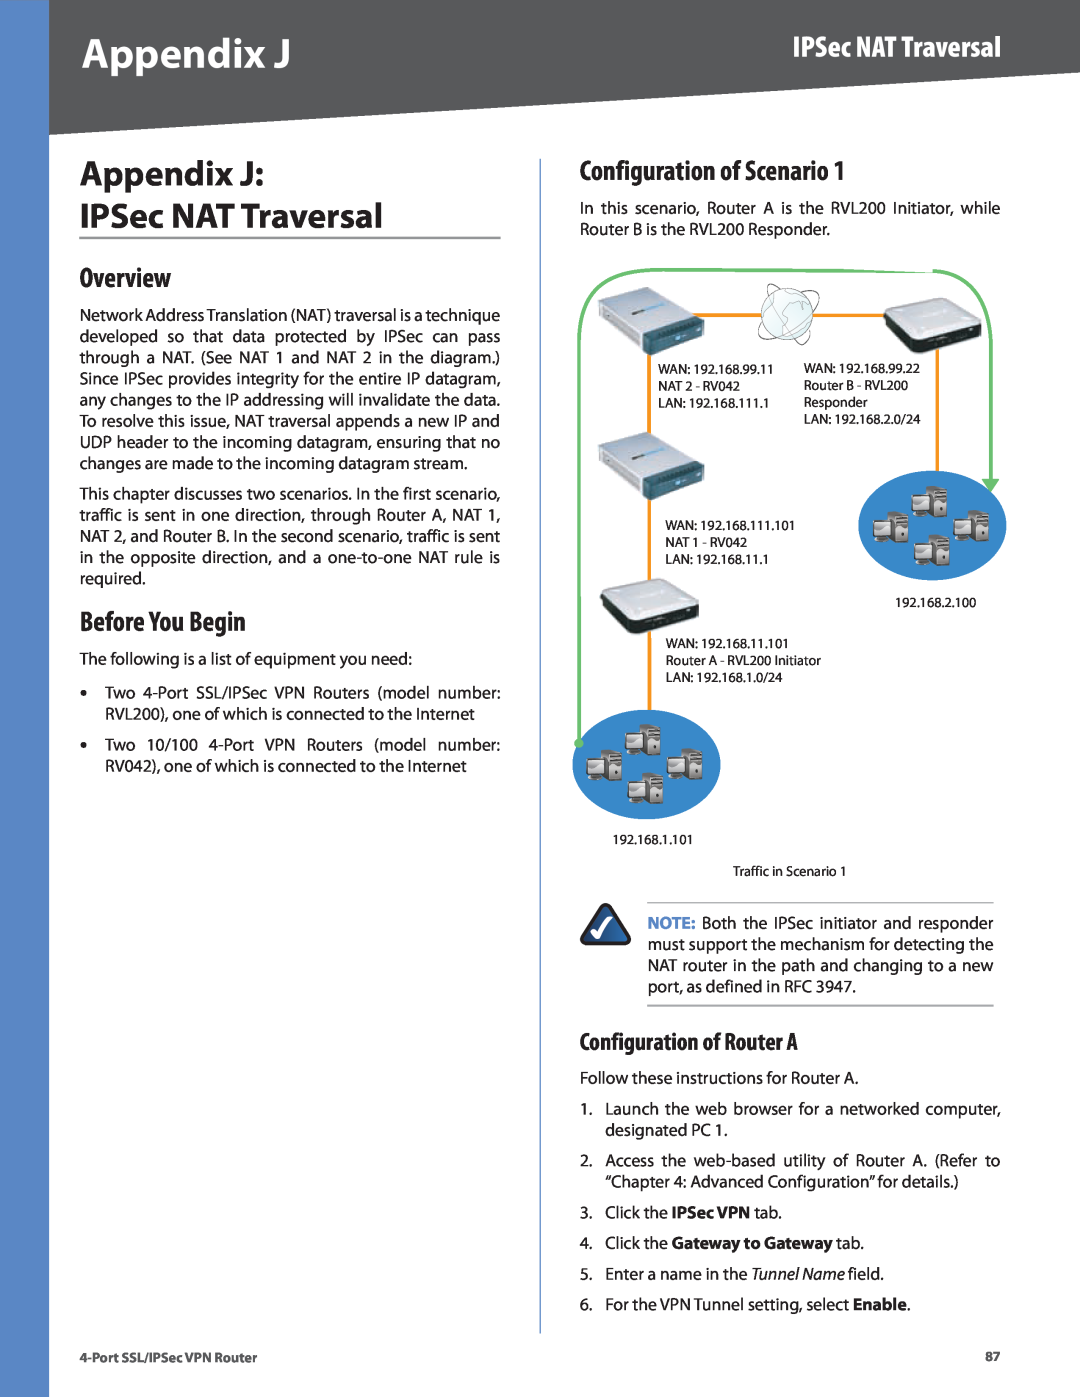 Cisco Systems RVL200 Appendix J IPSec NAT Traversal, Configuration of Scenario, Configuration of Router A, Overview 